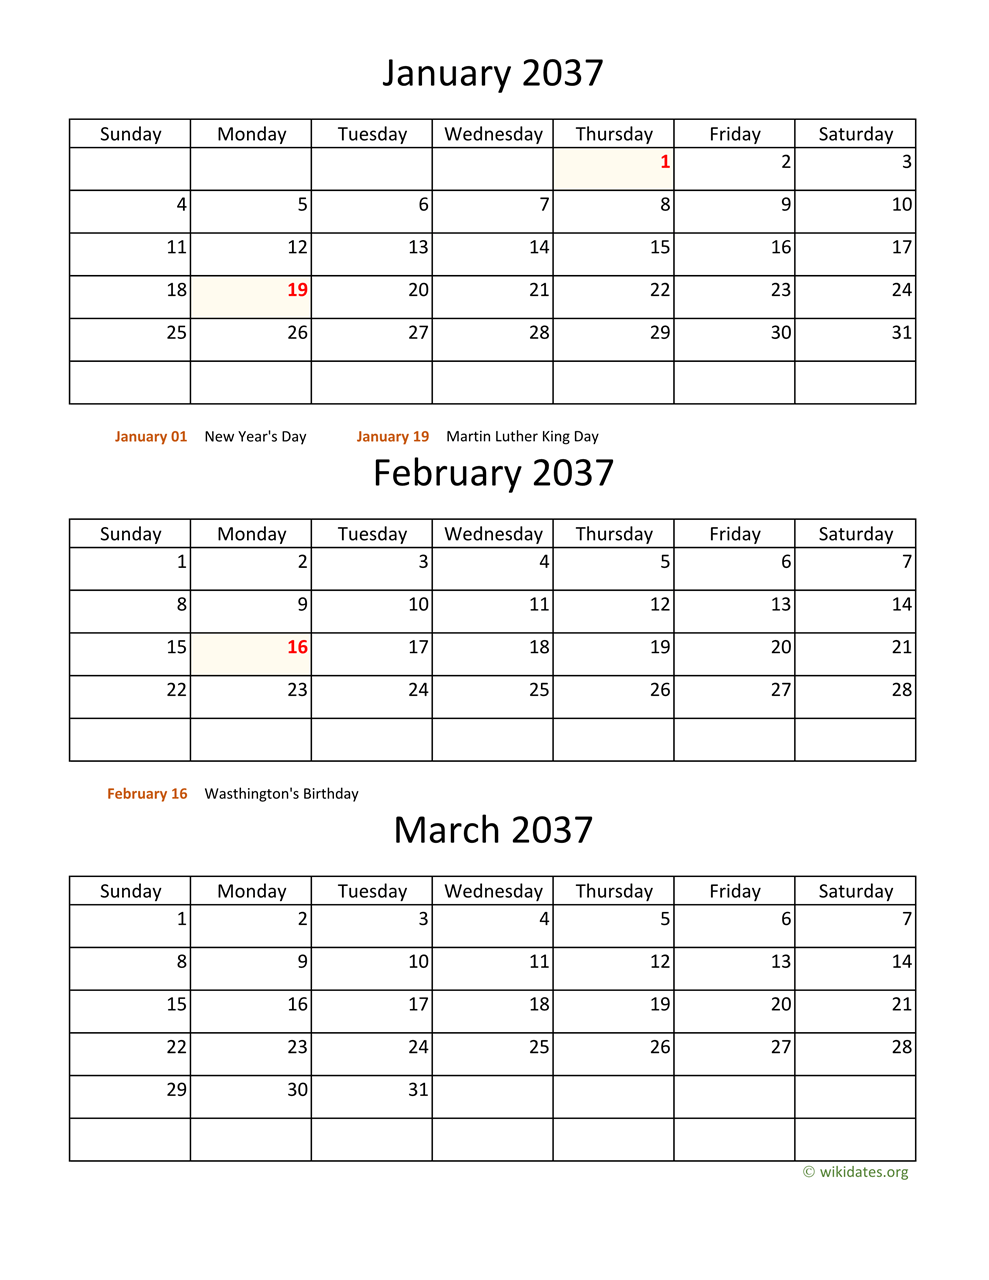 Printable 2037 Calendar | WikiDates.org